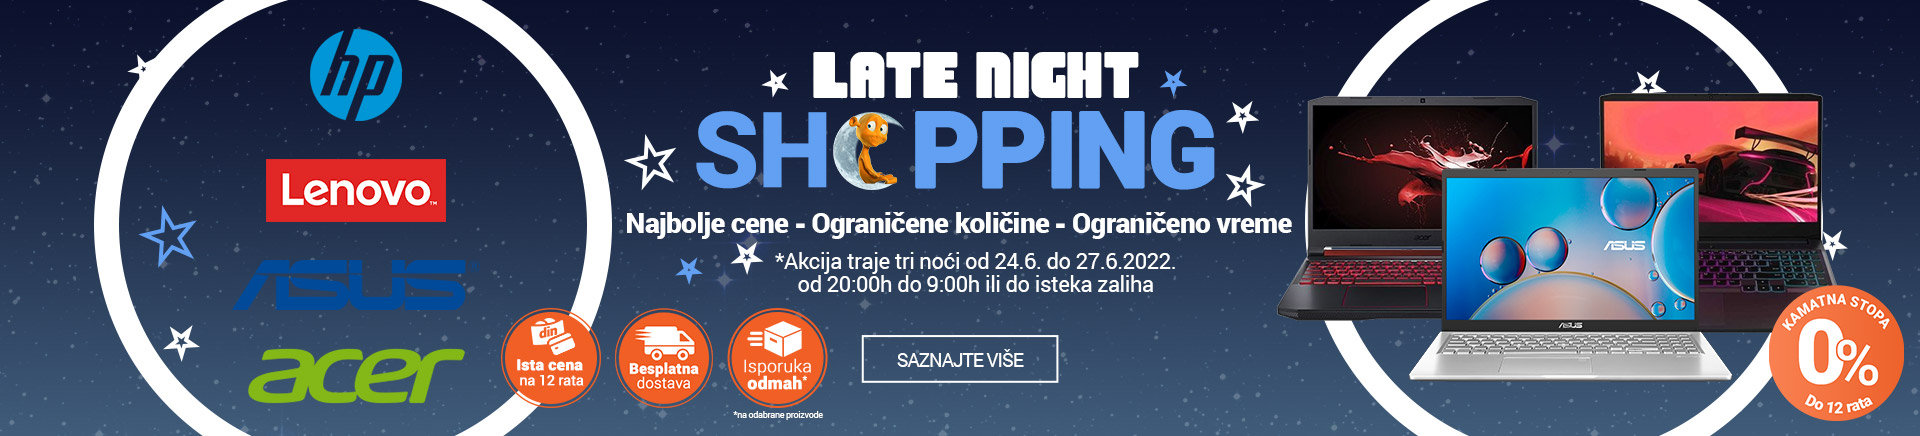 RS LNS late night shopping slider MOBILE 380 X 436.jpg